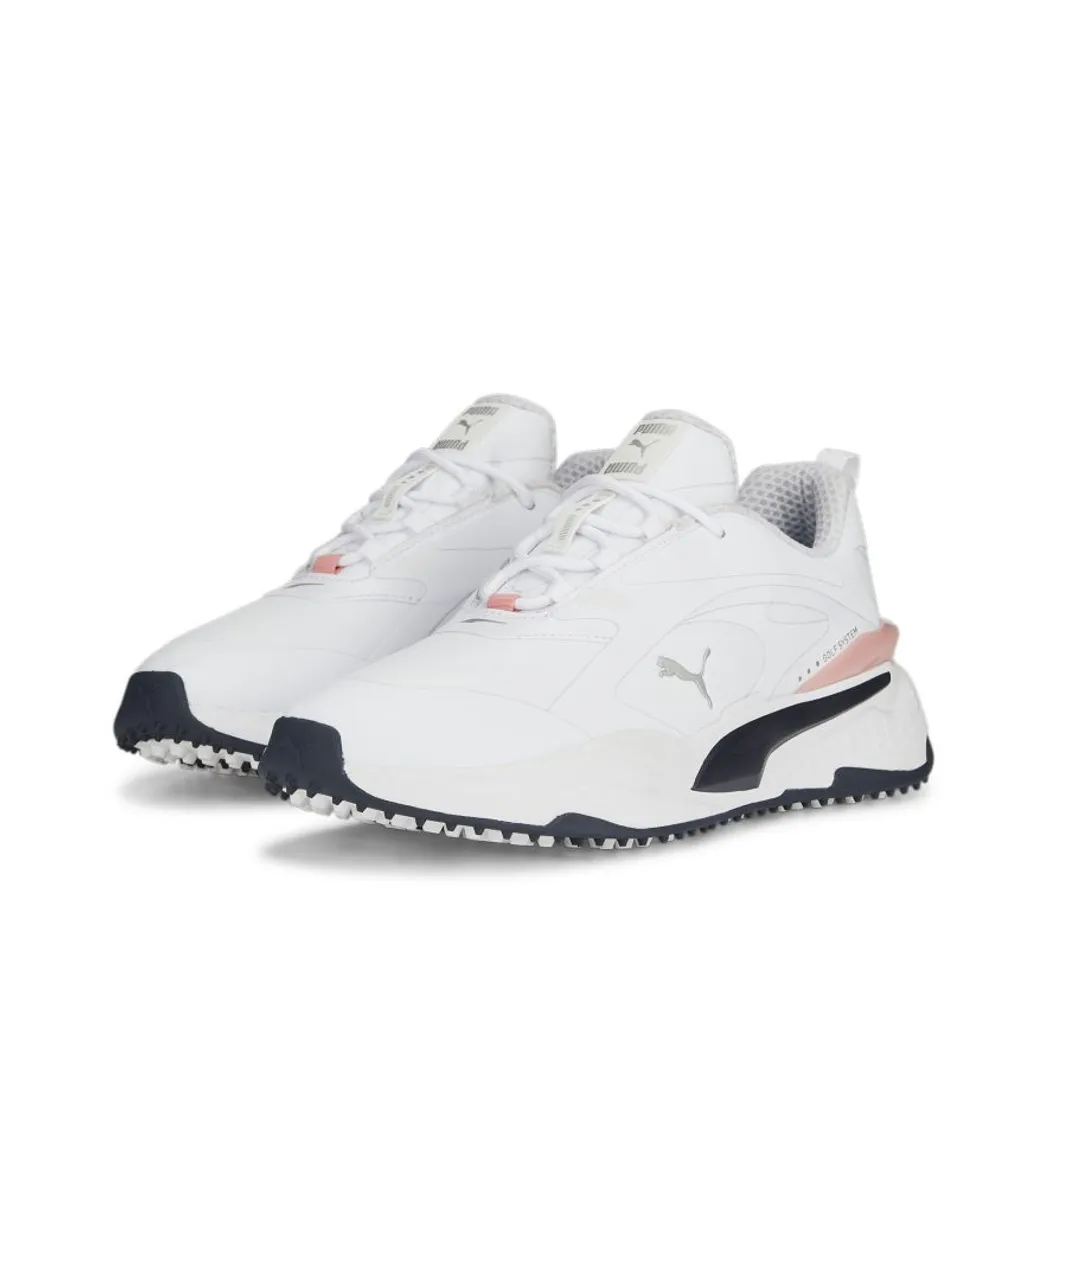 Puma Womens GS-Fast Golf Shoes - White